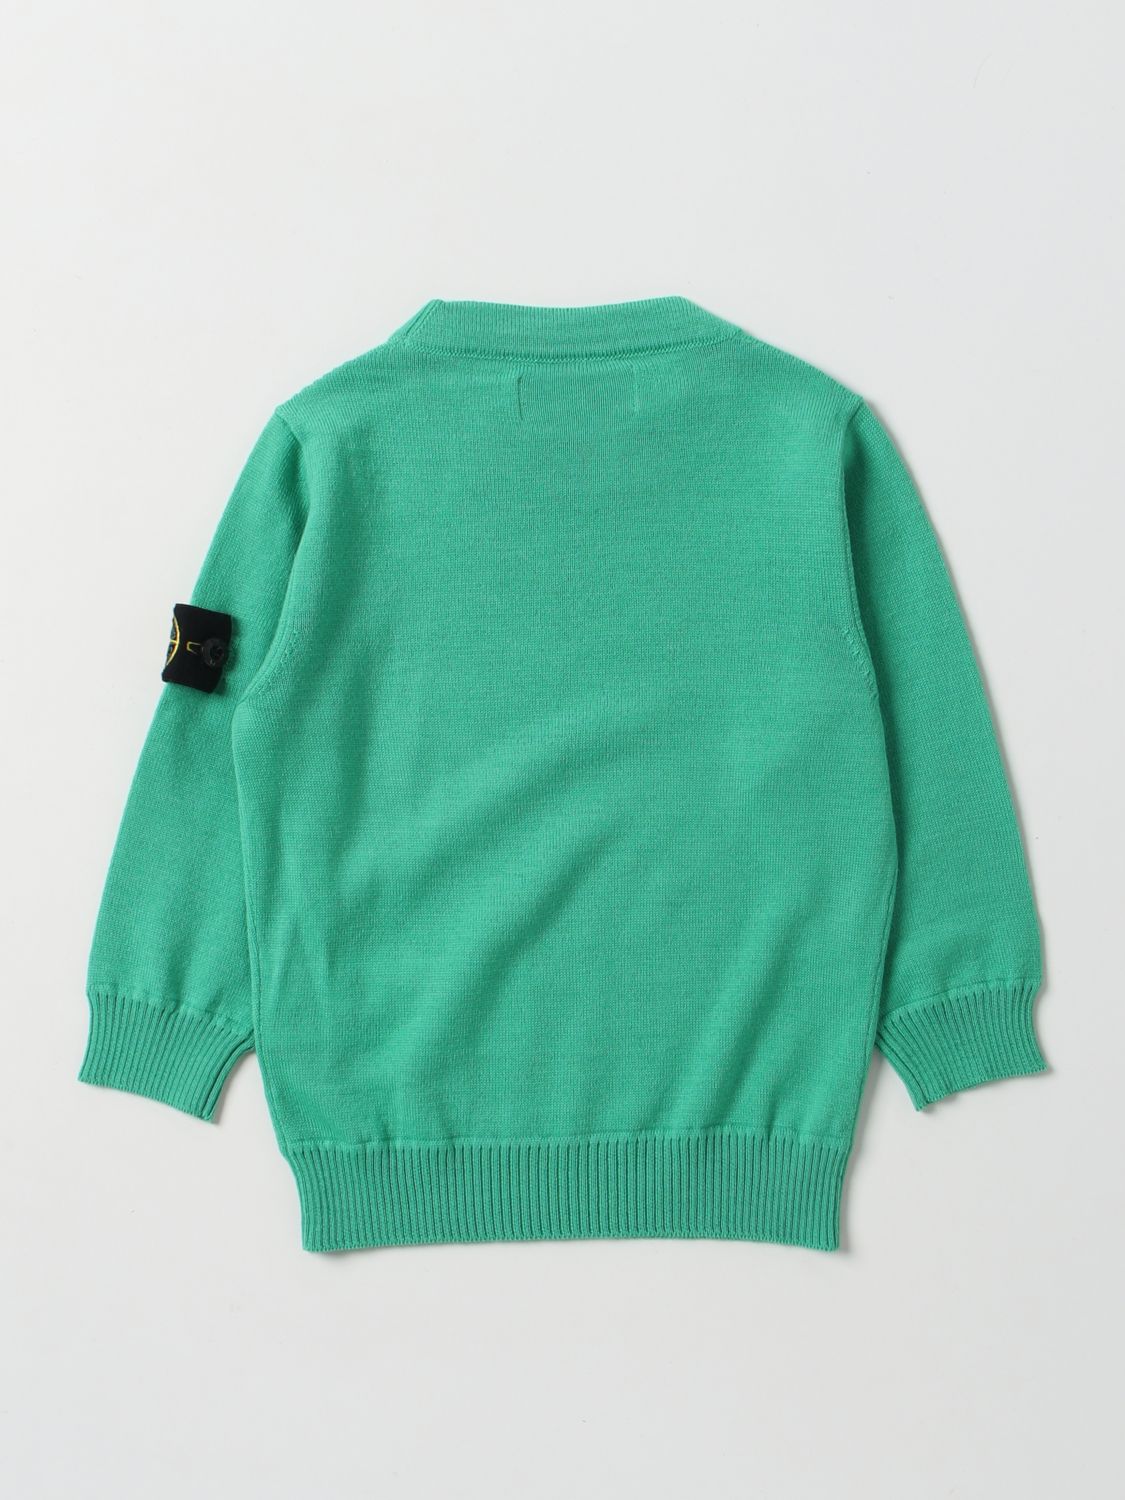 STONE ISLAND JUNIOR: sweater for boys - Green | Stone Island Junior ...